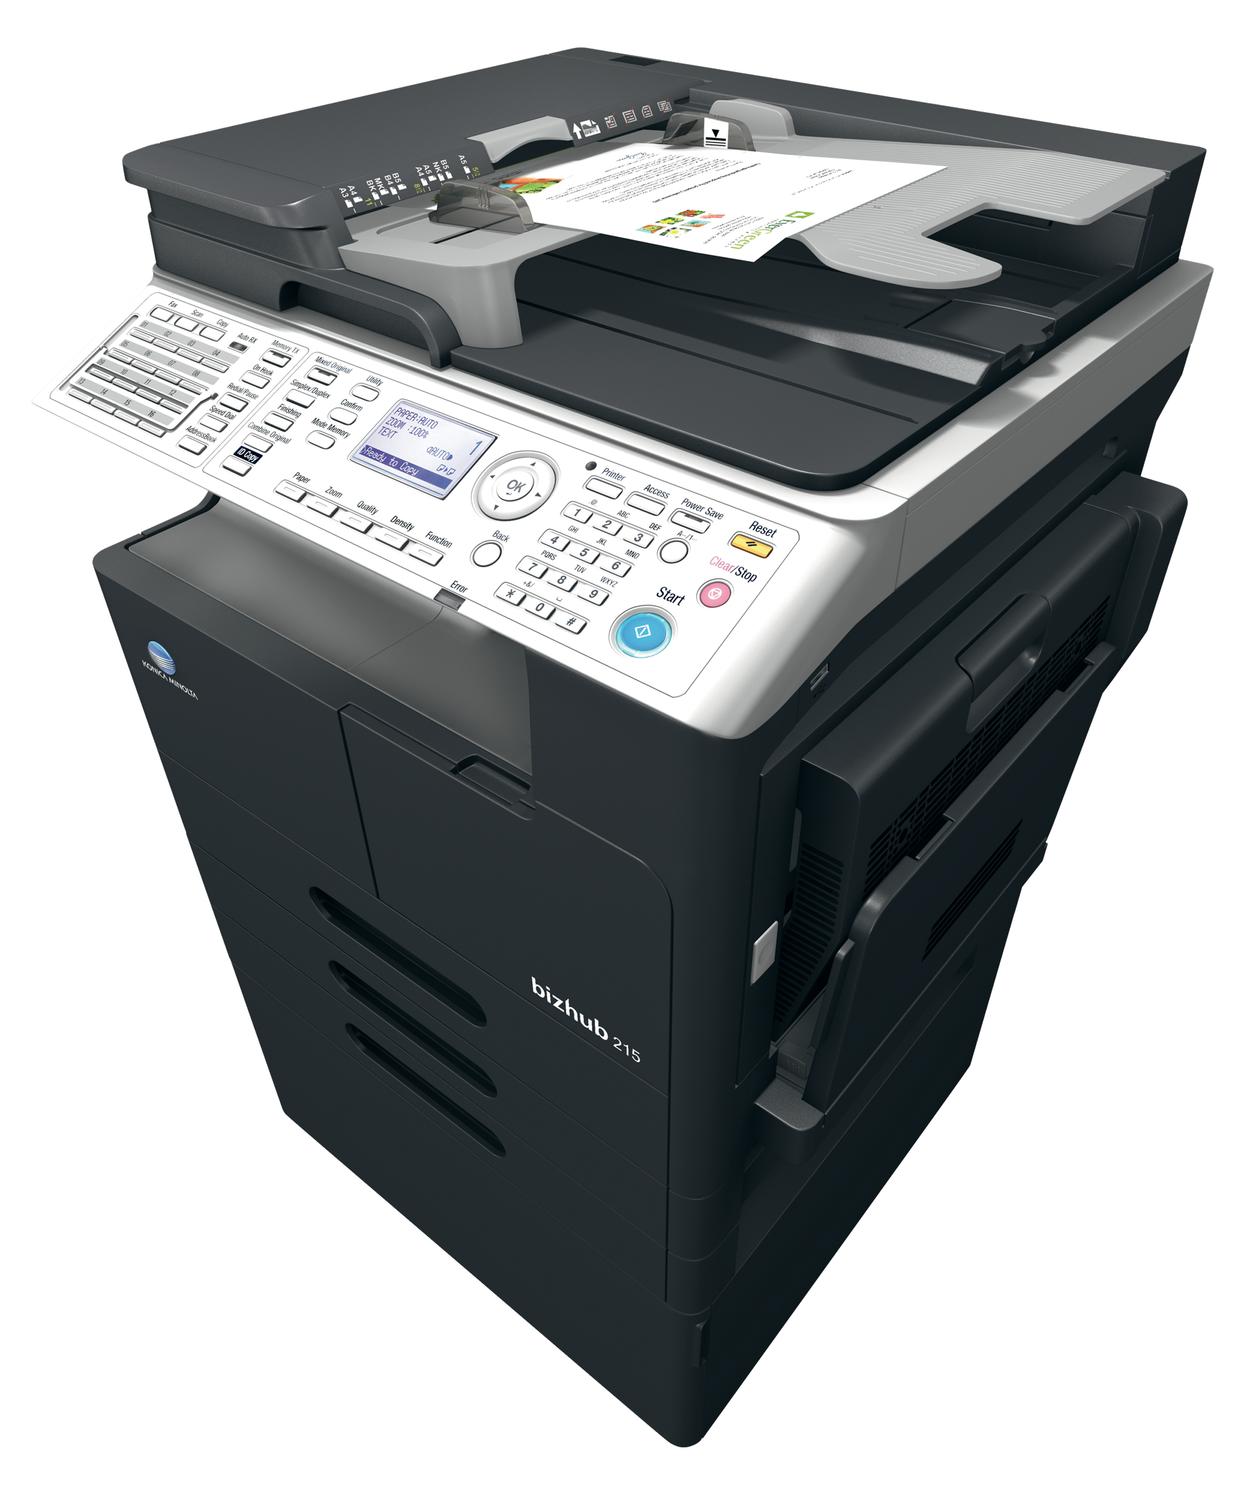 Konica Minolta Bizhub 215 Copier Printer Scanner - CopyFaxes